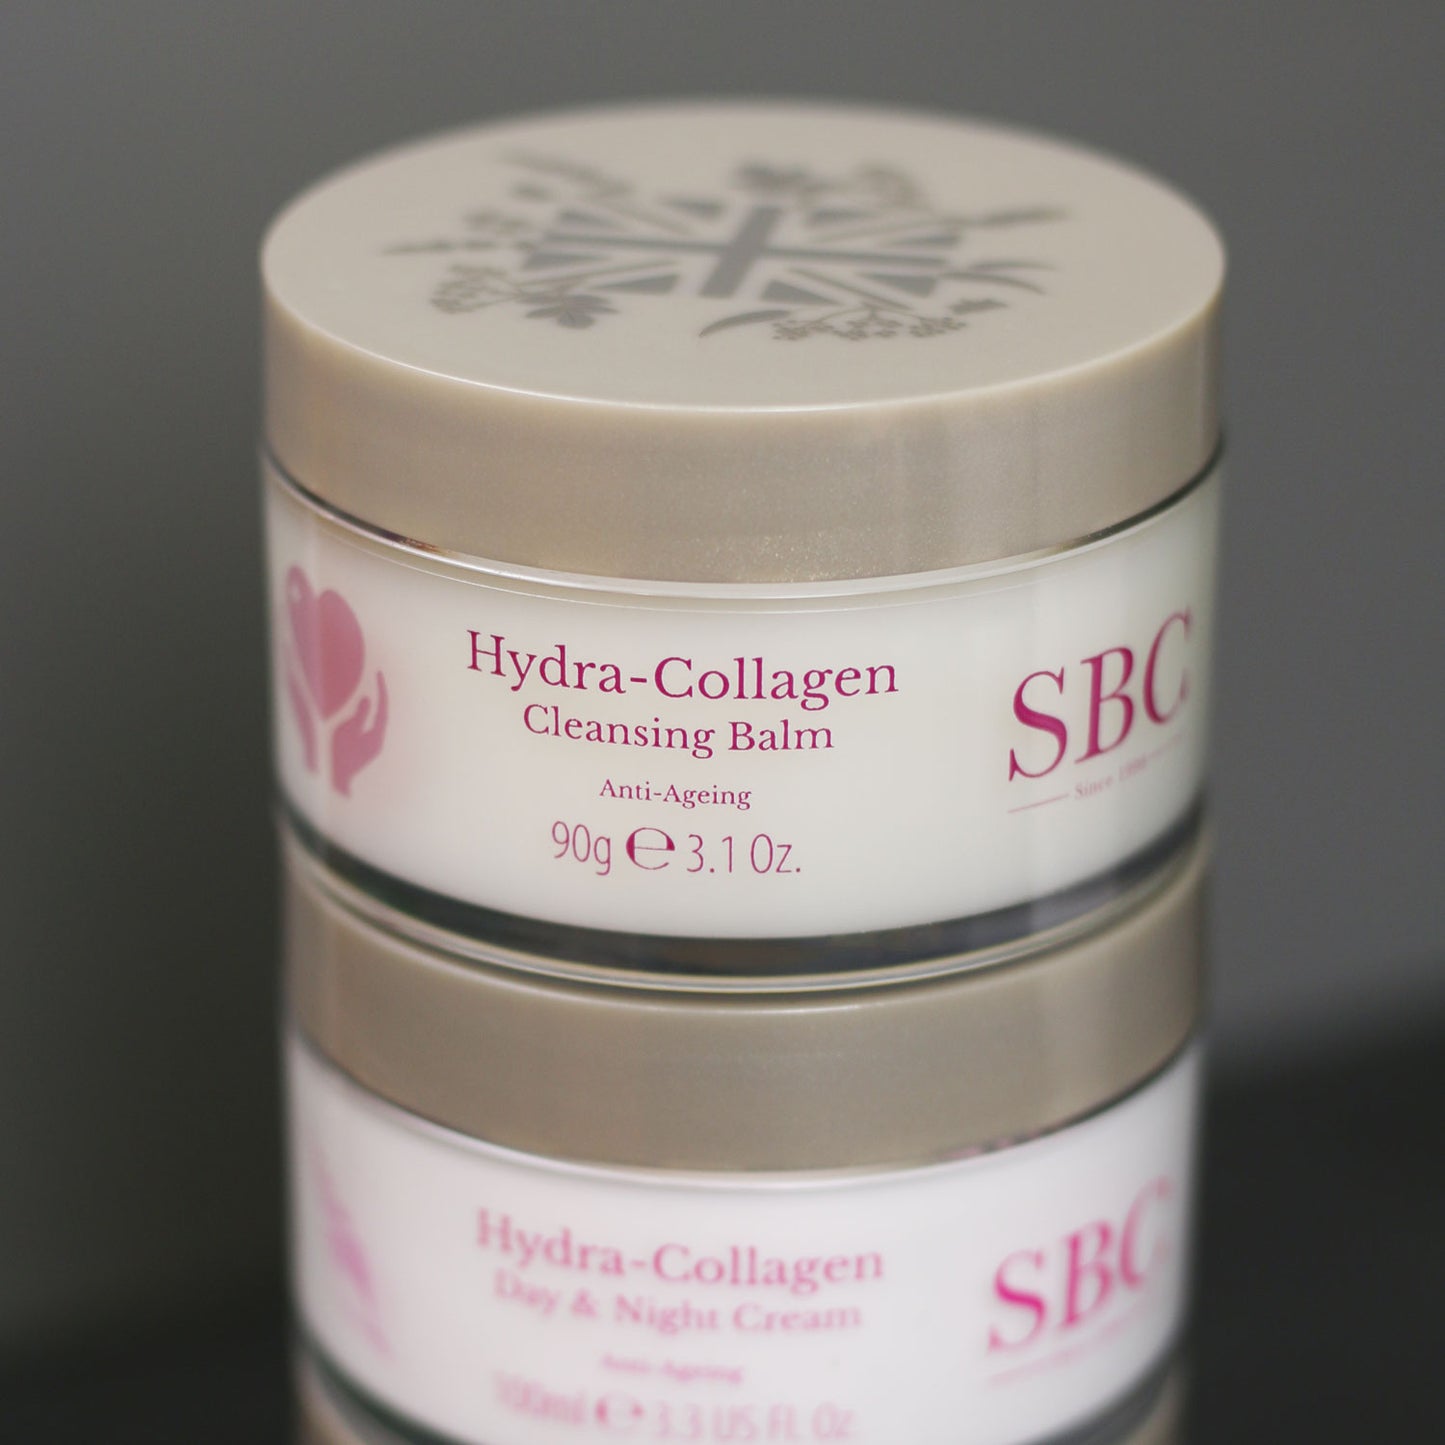 Hydra-Collagen Cleansing Balm on top of a Hydra-Collagen Day & night Cream